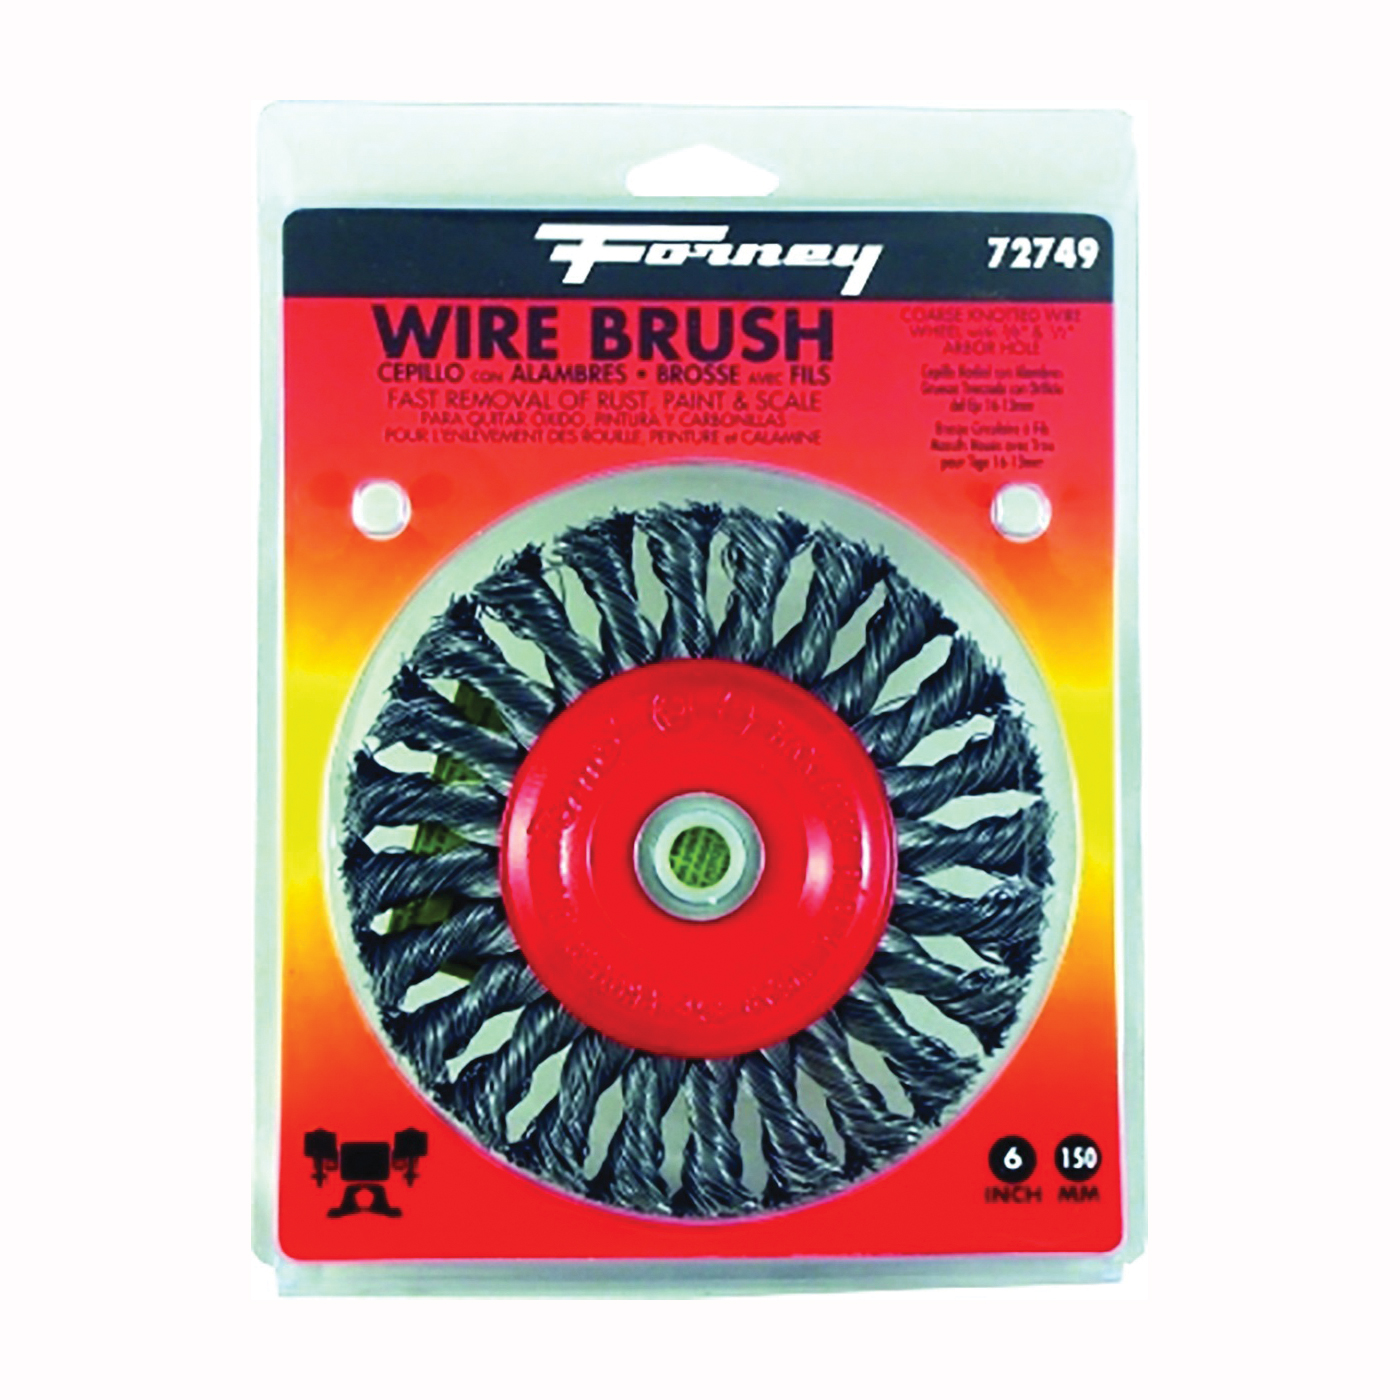 72749 Wire Wheel Brush, 6 in Dia, 1/2 to 5/8 in Arbor/Shank, 0.012 in Dia Bristle